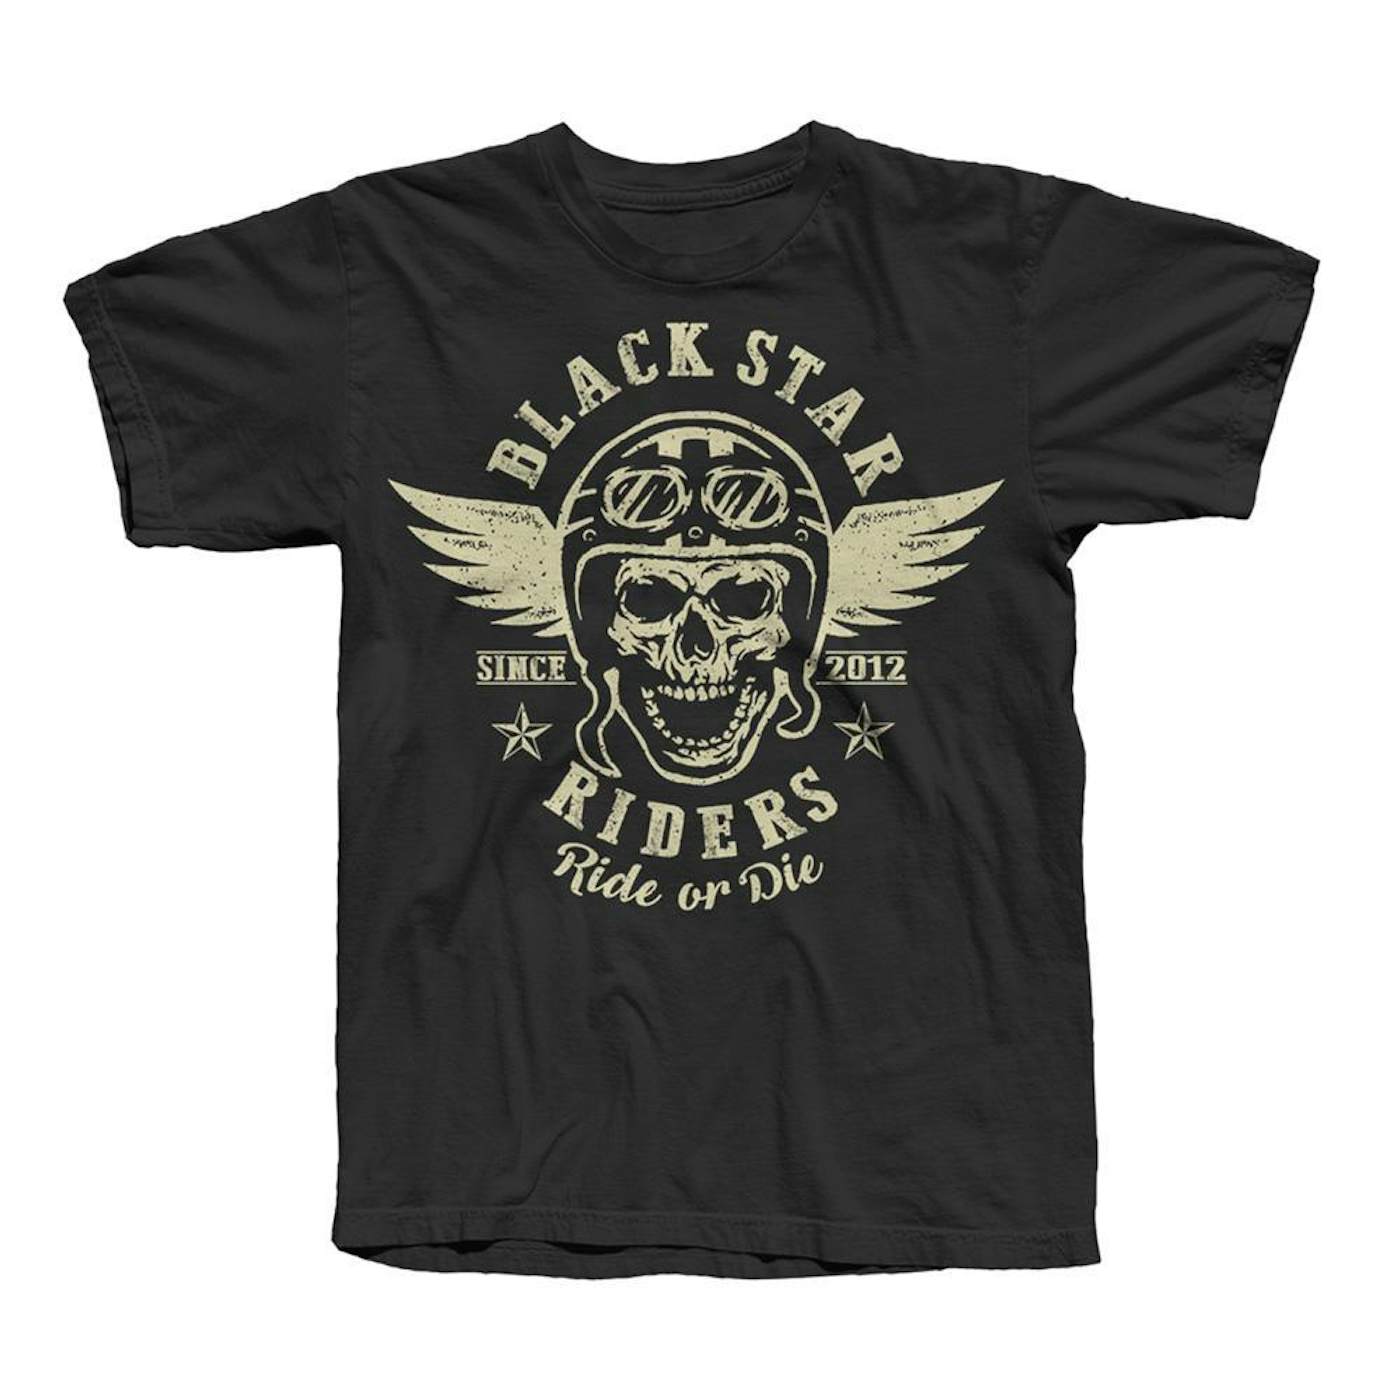 slå op spray Haiku Black Star Riders Skeleton Biker Black T-Shirt